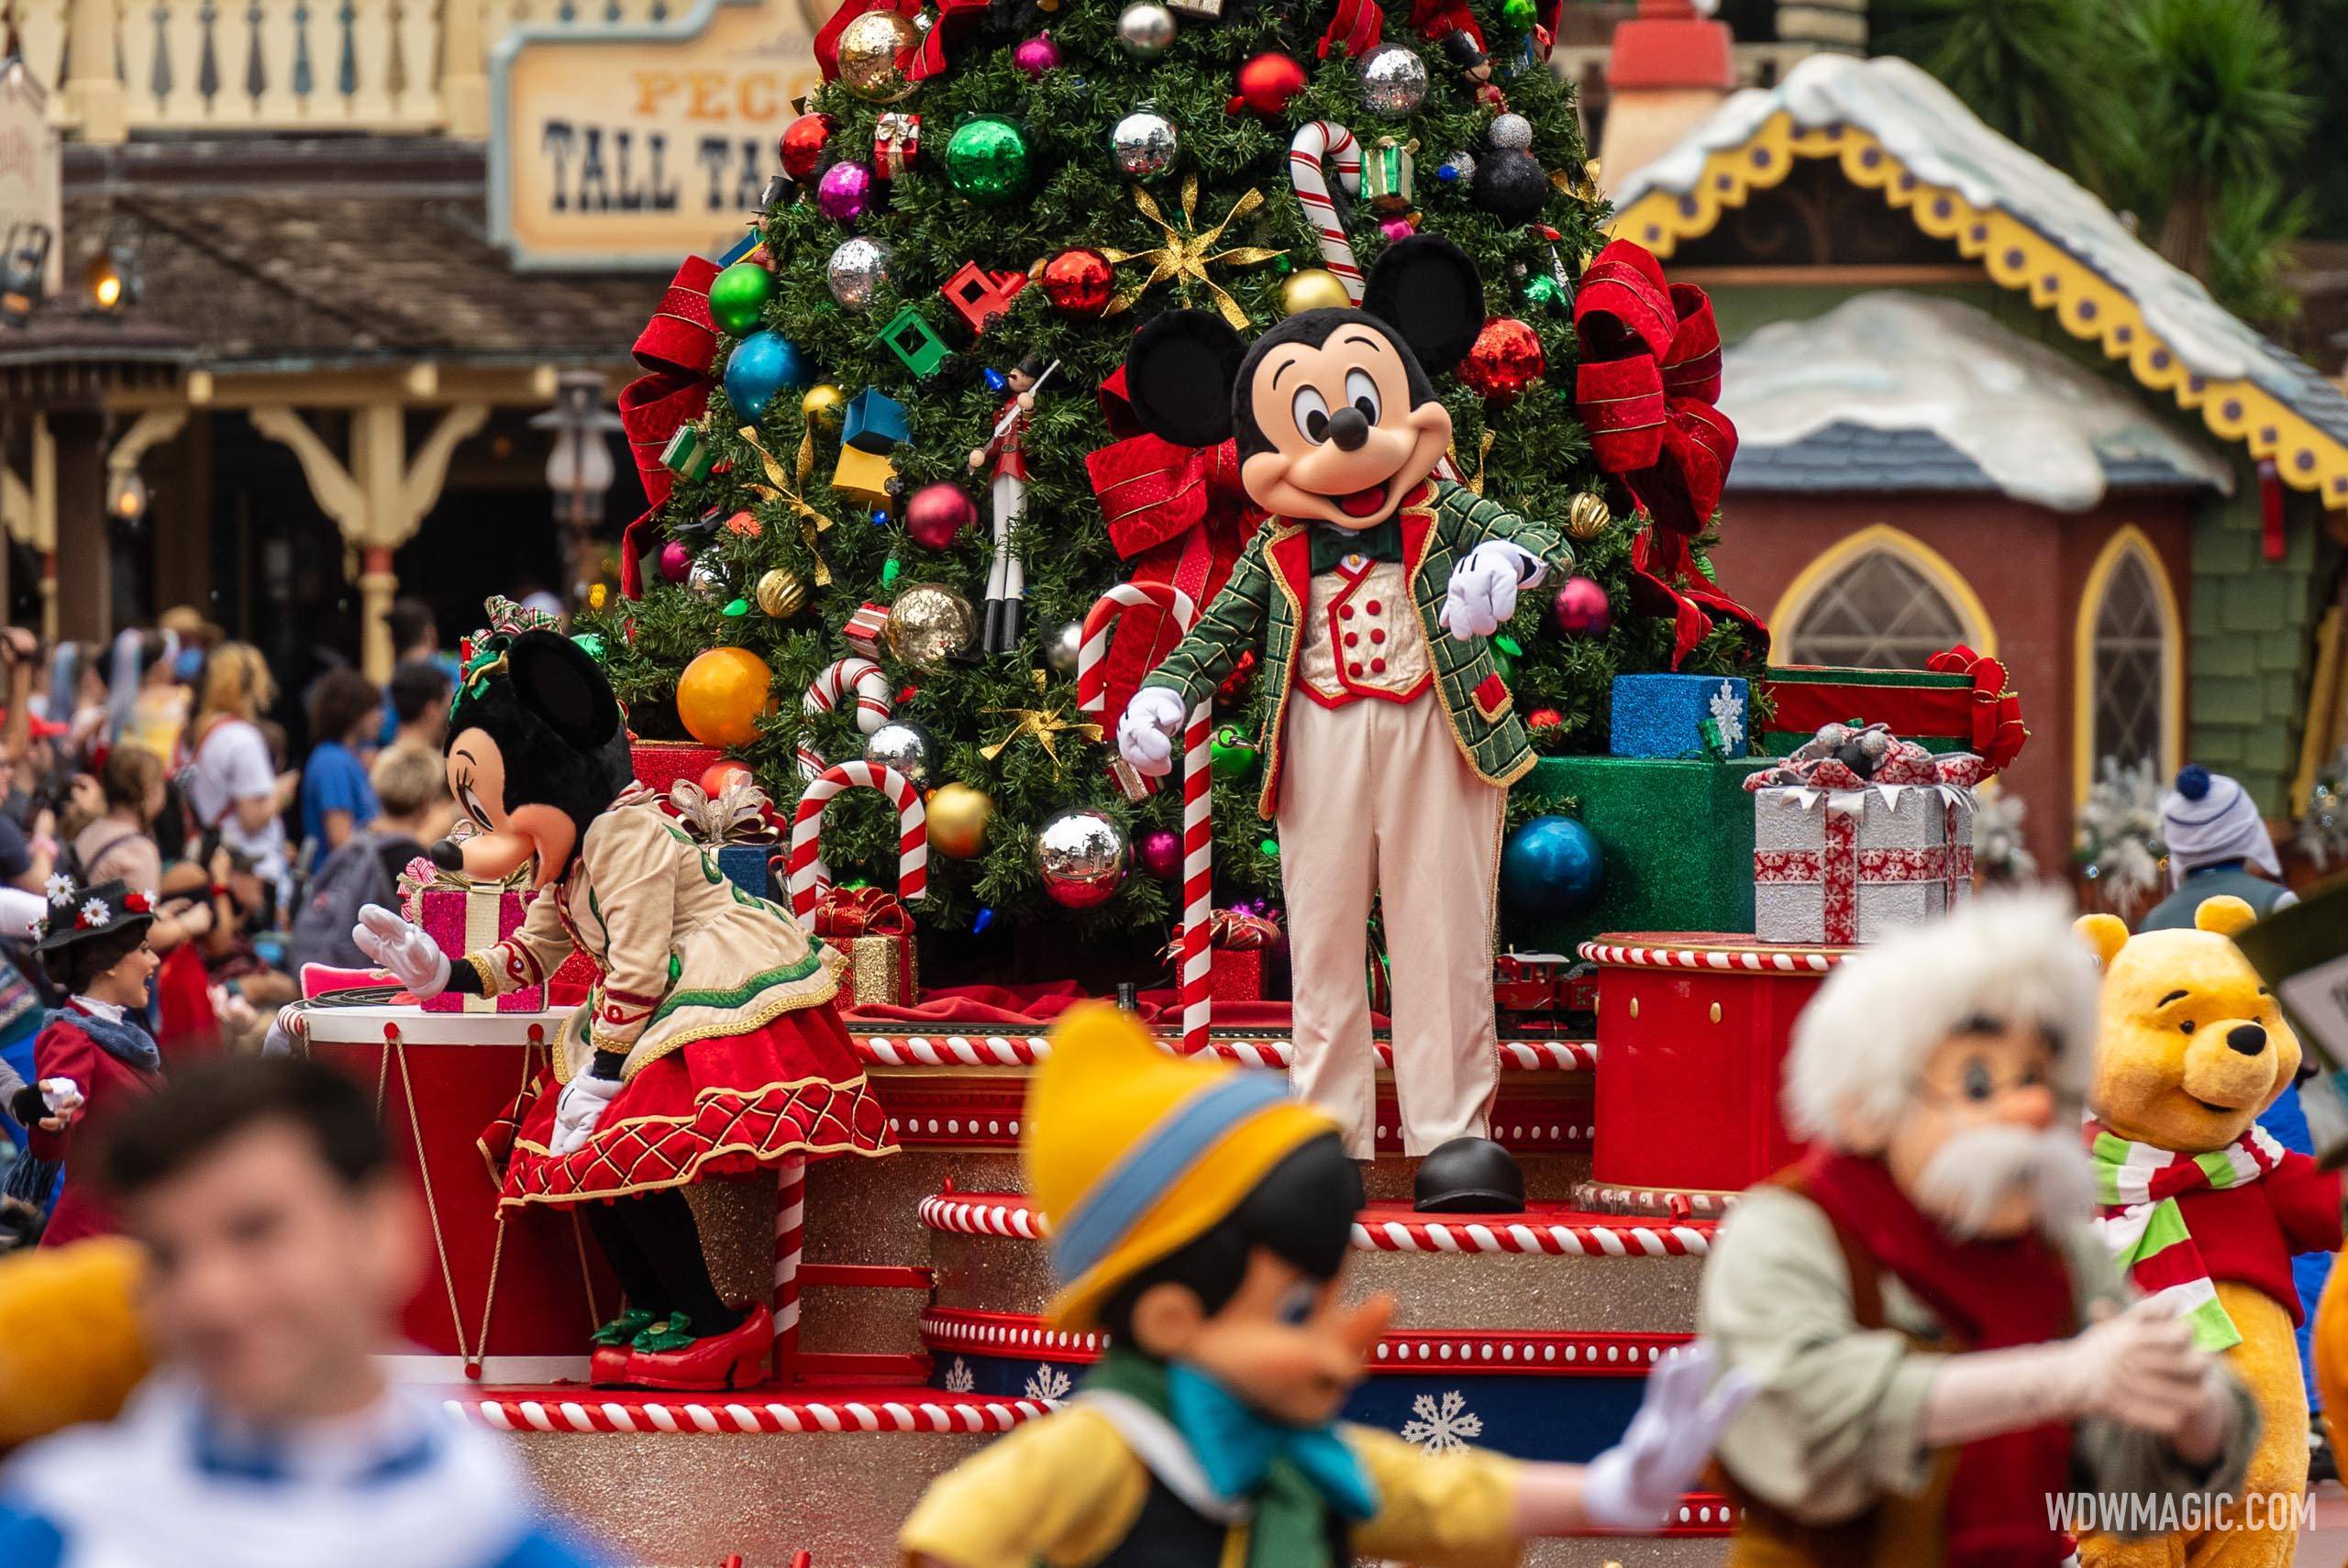 Magic Kingdom's holiday entertainment begins during regular park hours tomorrow